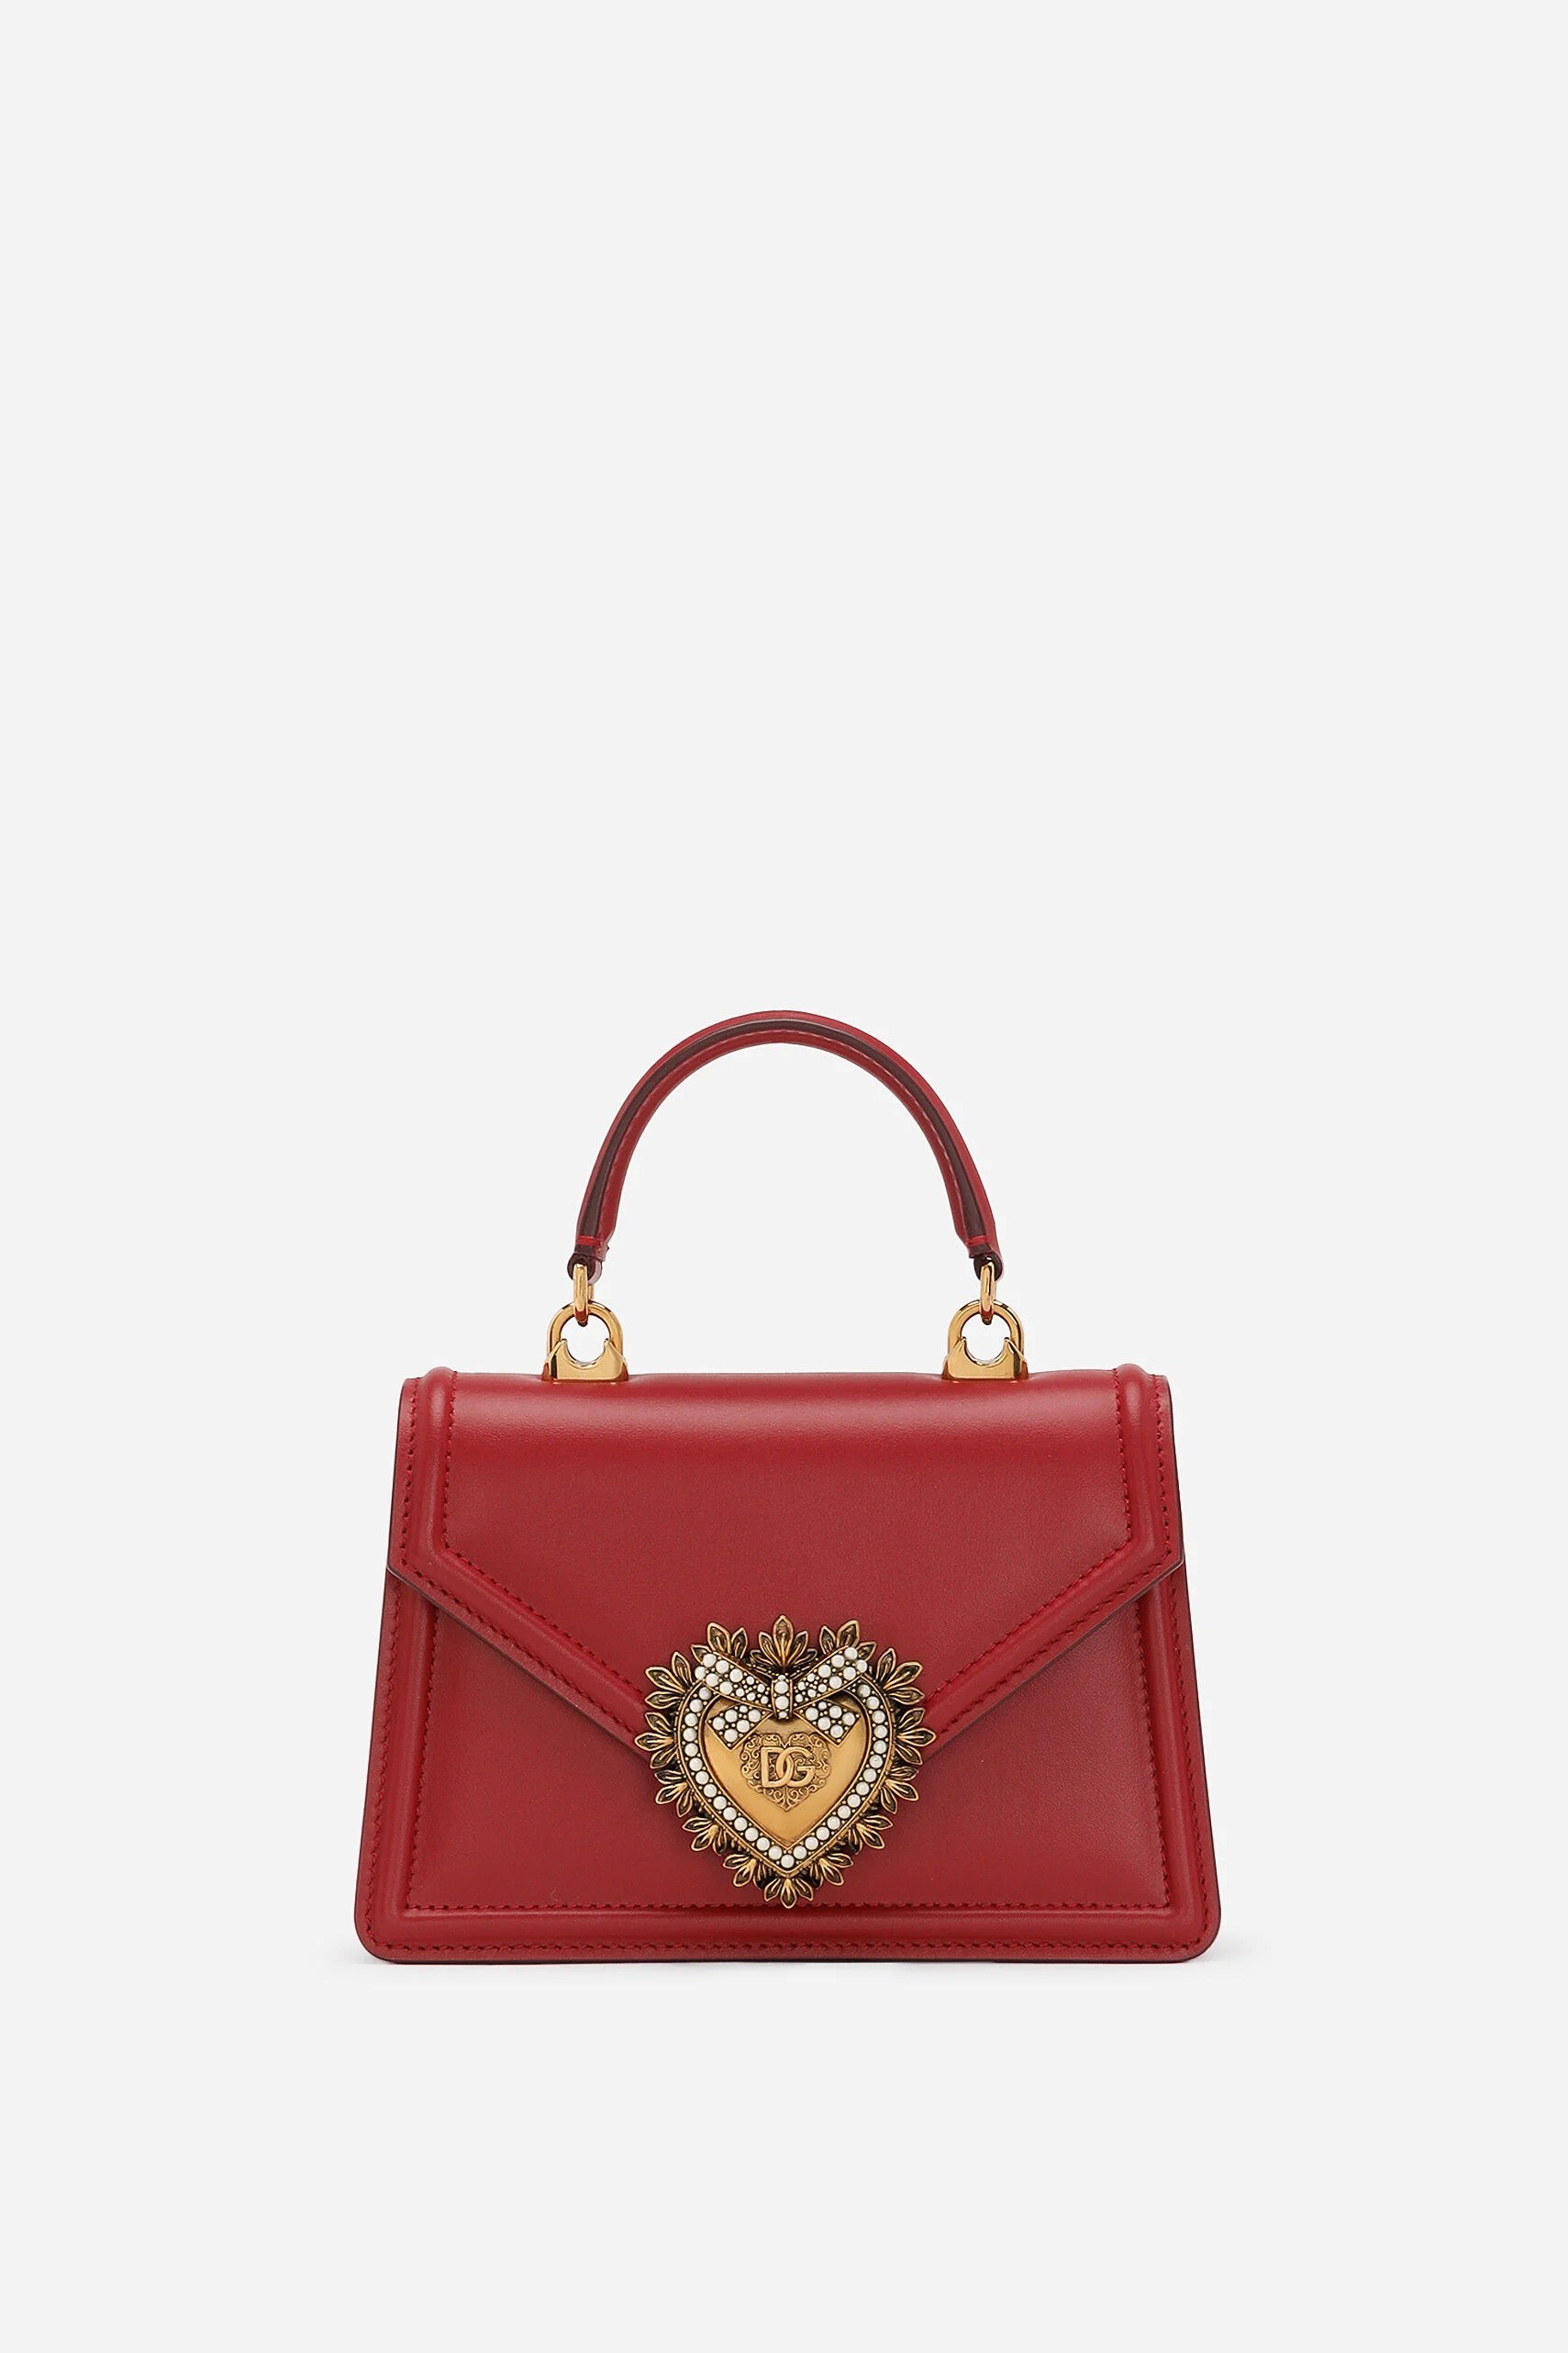 Dolce & Gabbana - Small smooth calfskin Devotion bag - Red